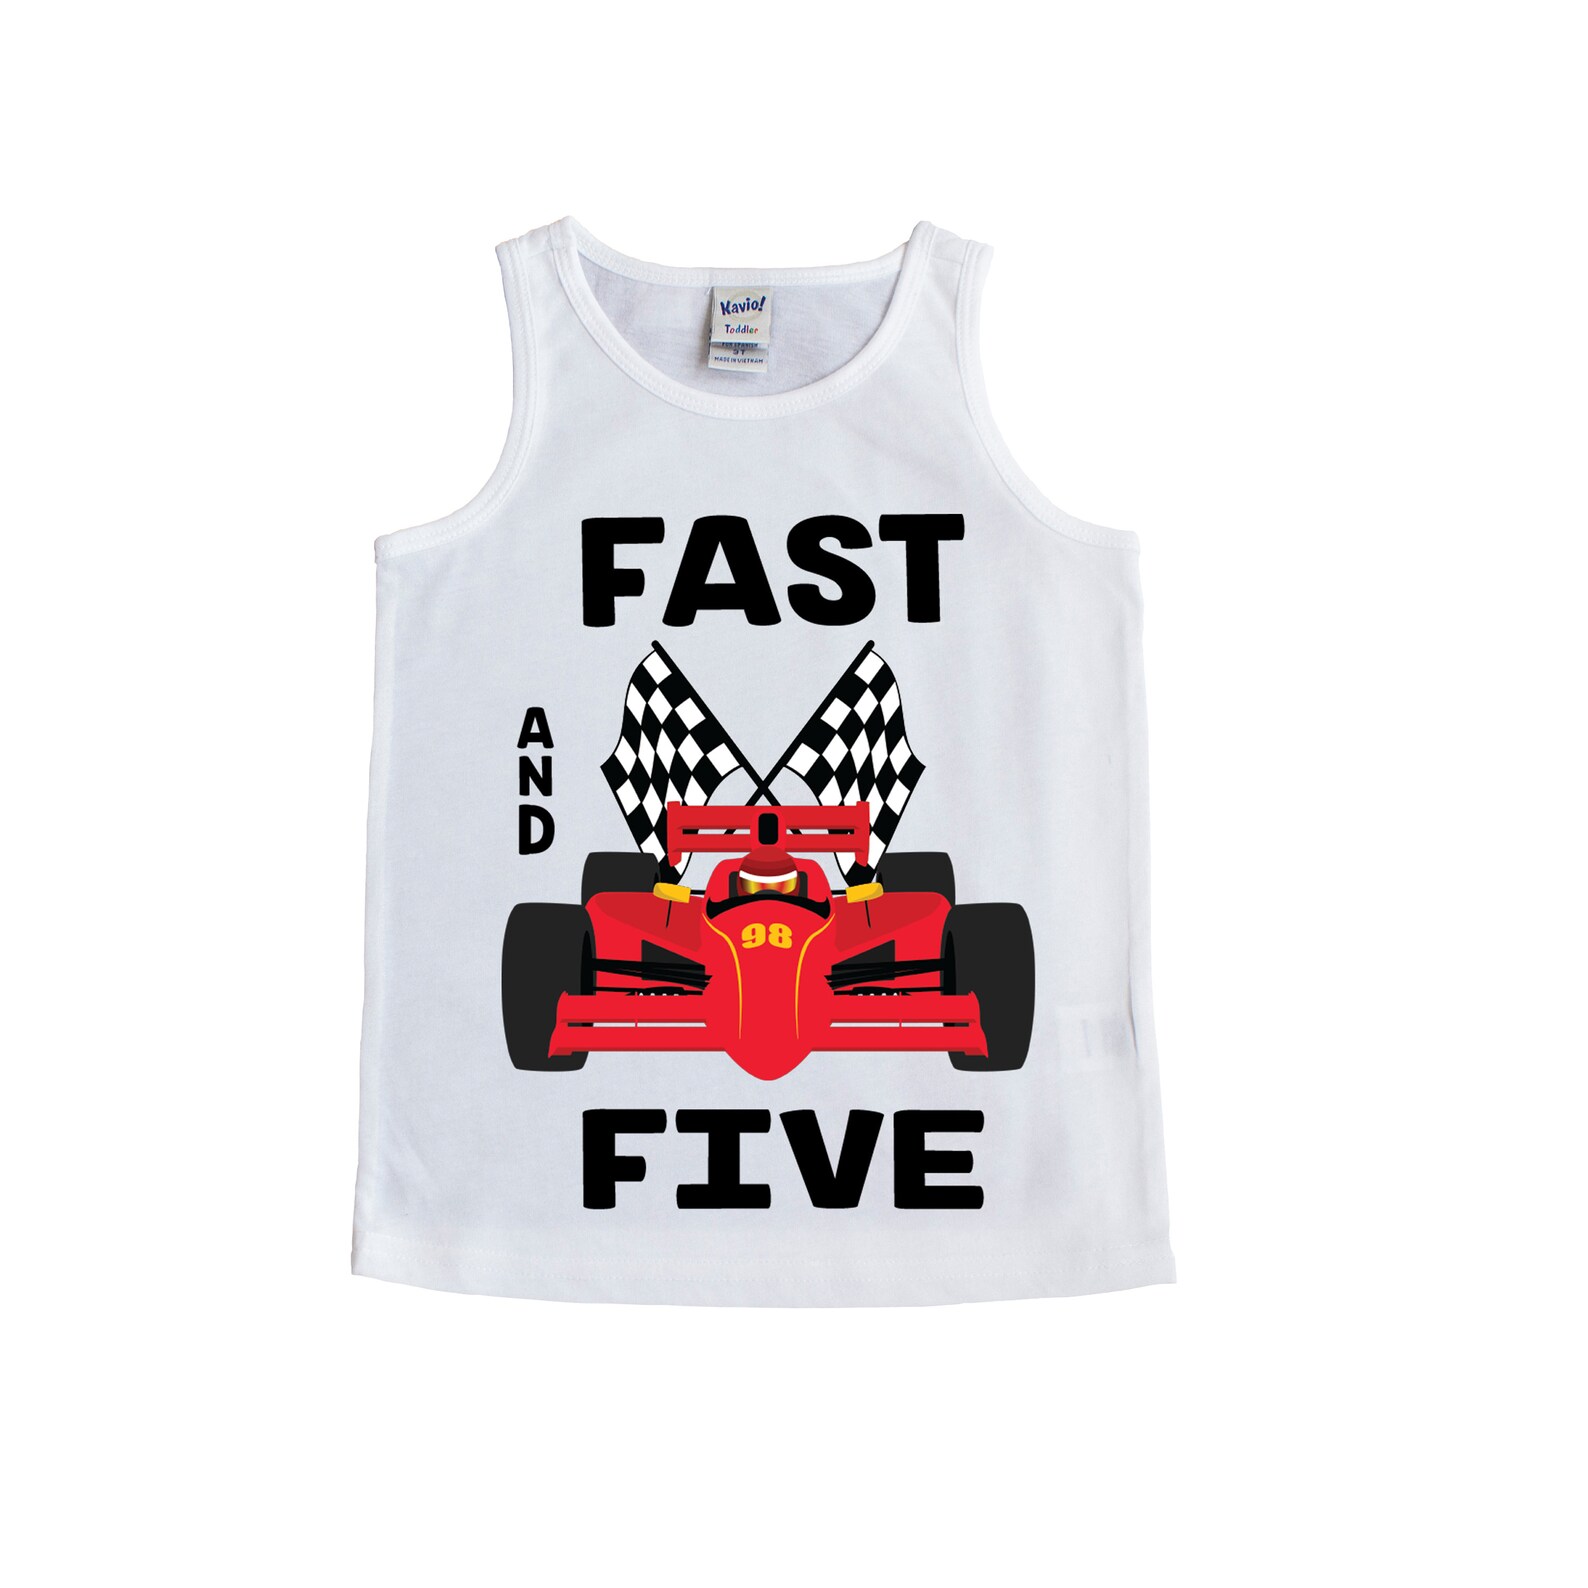 Fast and five 5th birthday race car shirt racecar birthday | Etsy